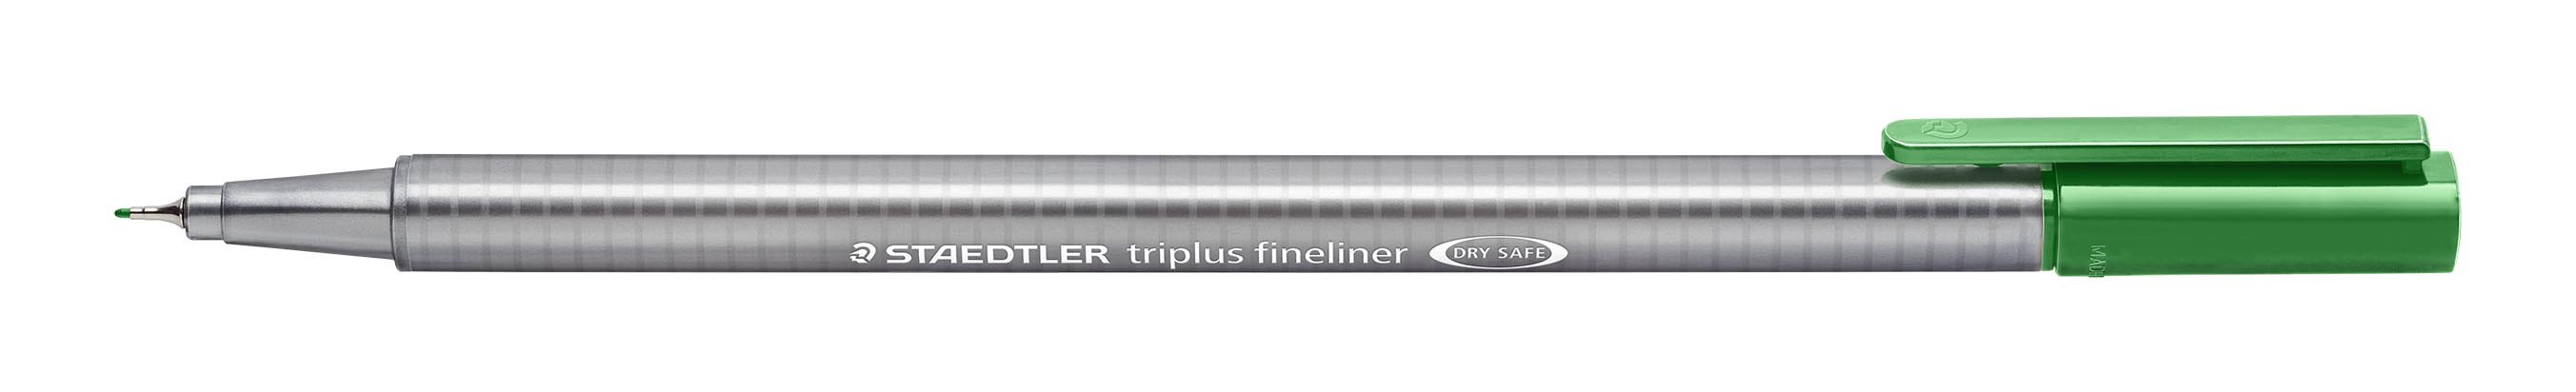 Fineliner Triplus 0,3mm grn, Staedtler 334-5, 10stk